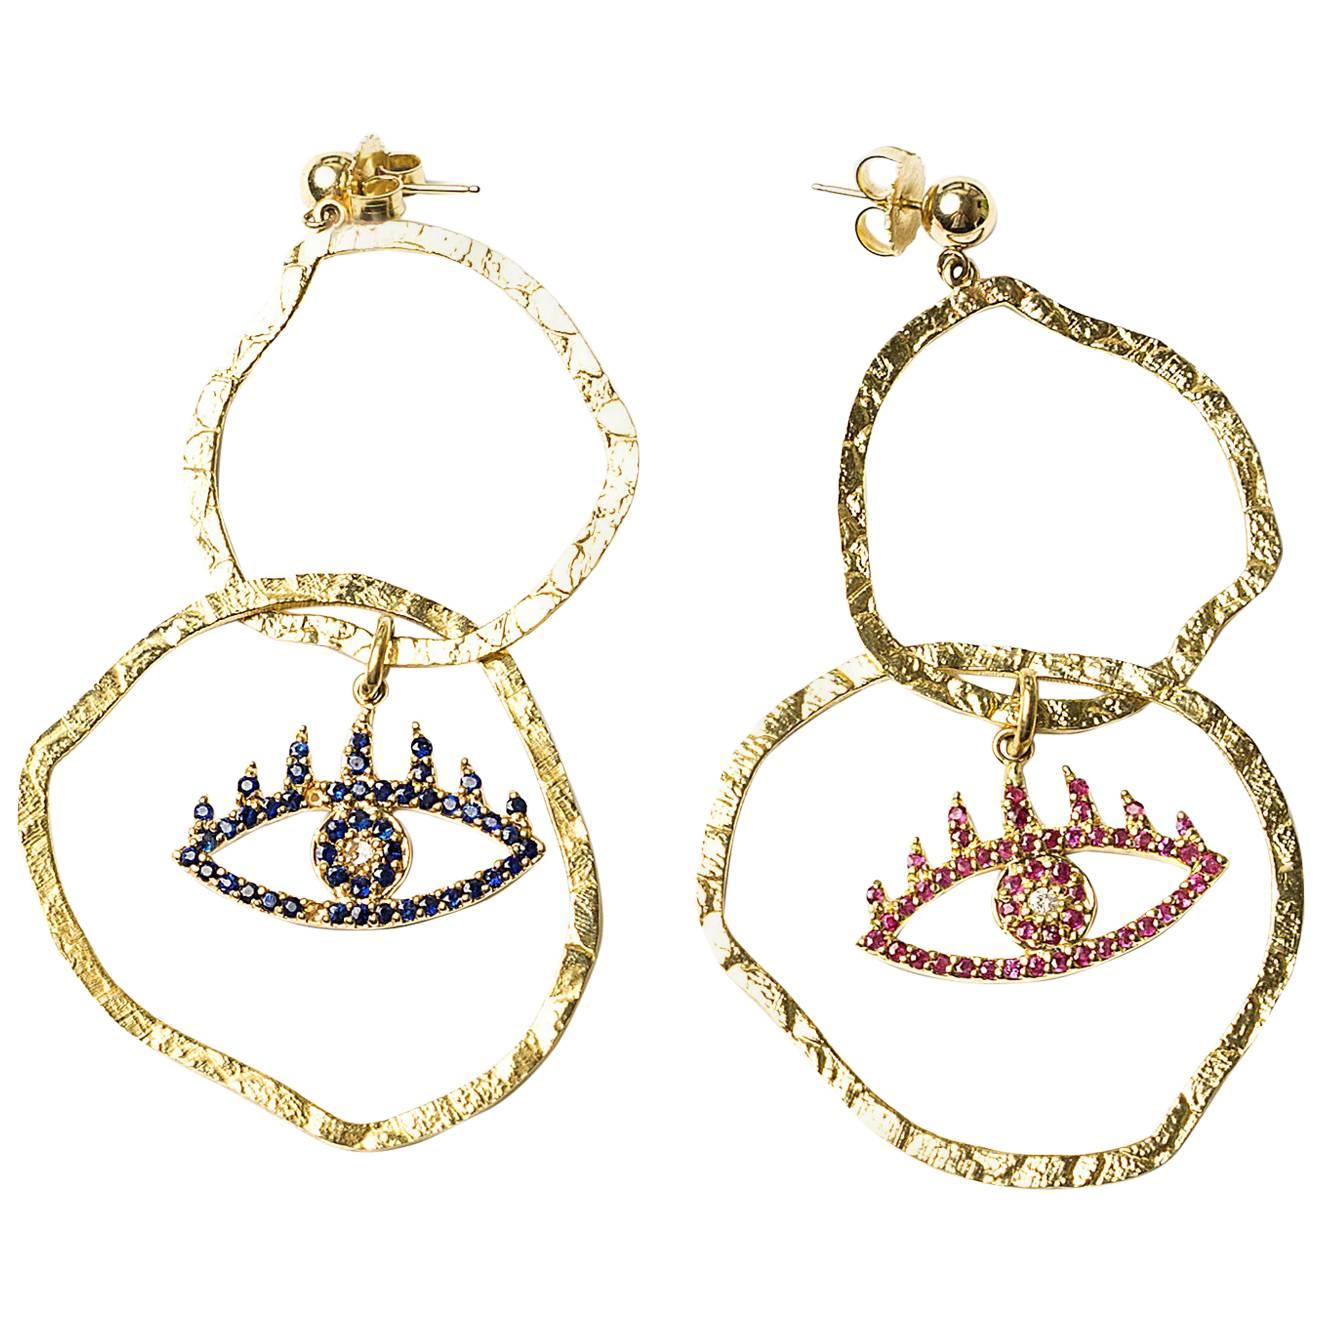 Clarissa Bronfman Gold, Ruby, Sapphire Double Hoop Earrings 